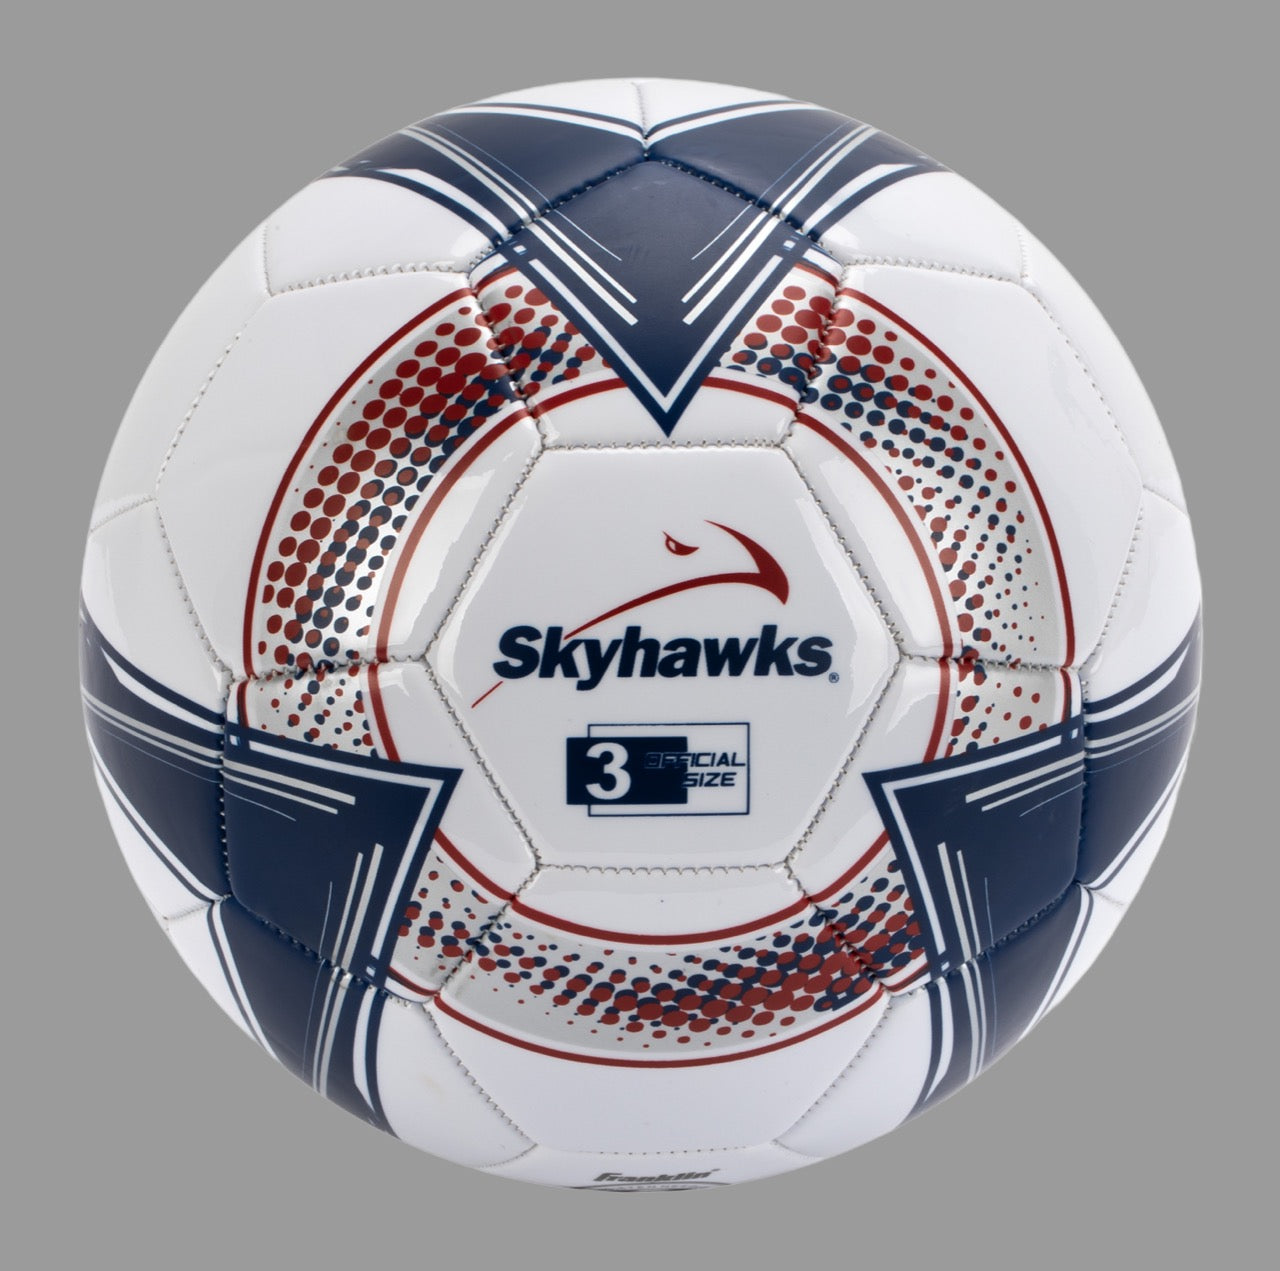 FRANKLIN SPORTS (36 BALLS) Size 3 Soccer Ball "Skyhawks"